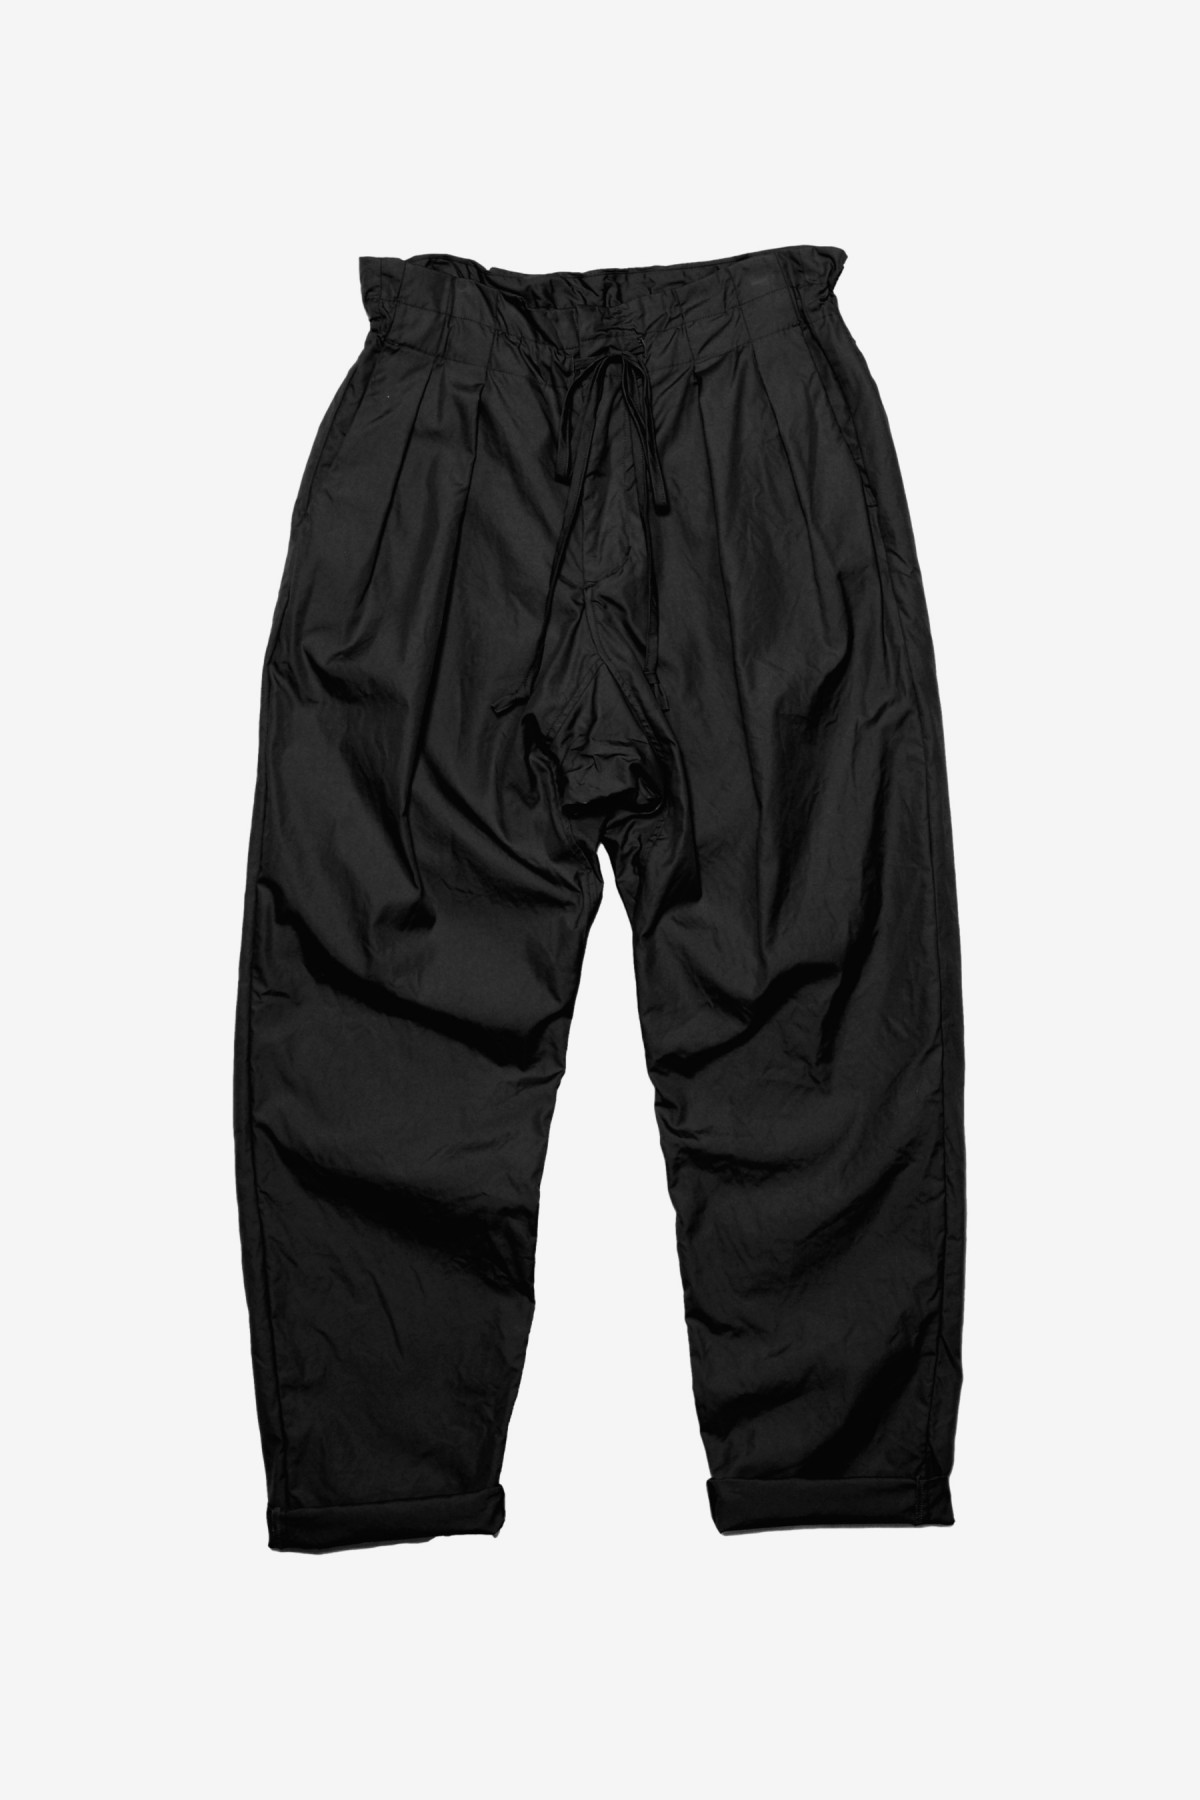 Monitaly Drop Crotch Pants in Vancloth Oxford Black